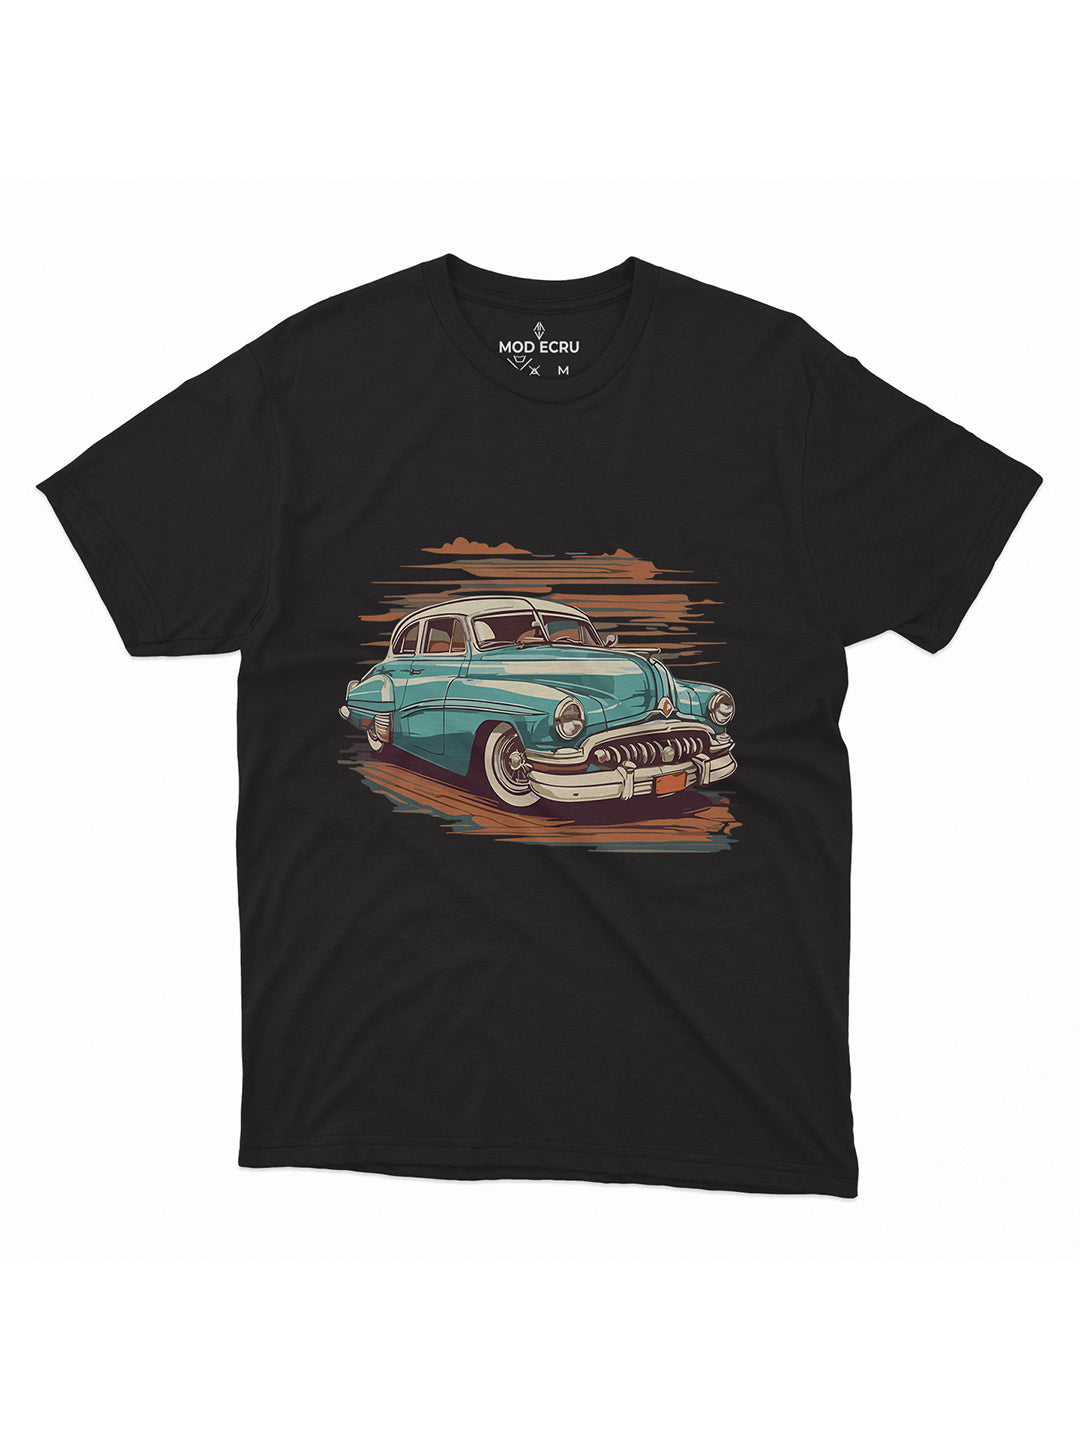 Vintage Car T-Shirt